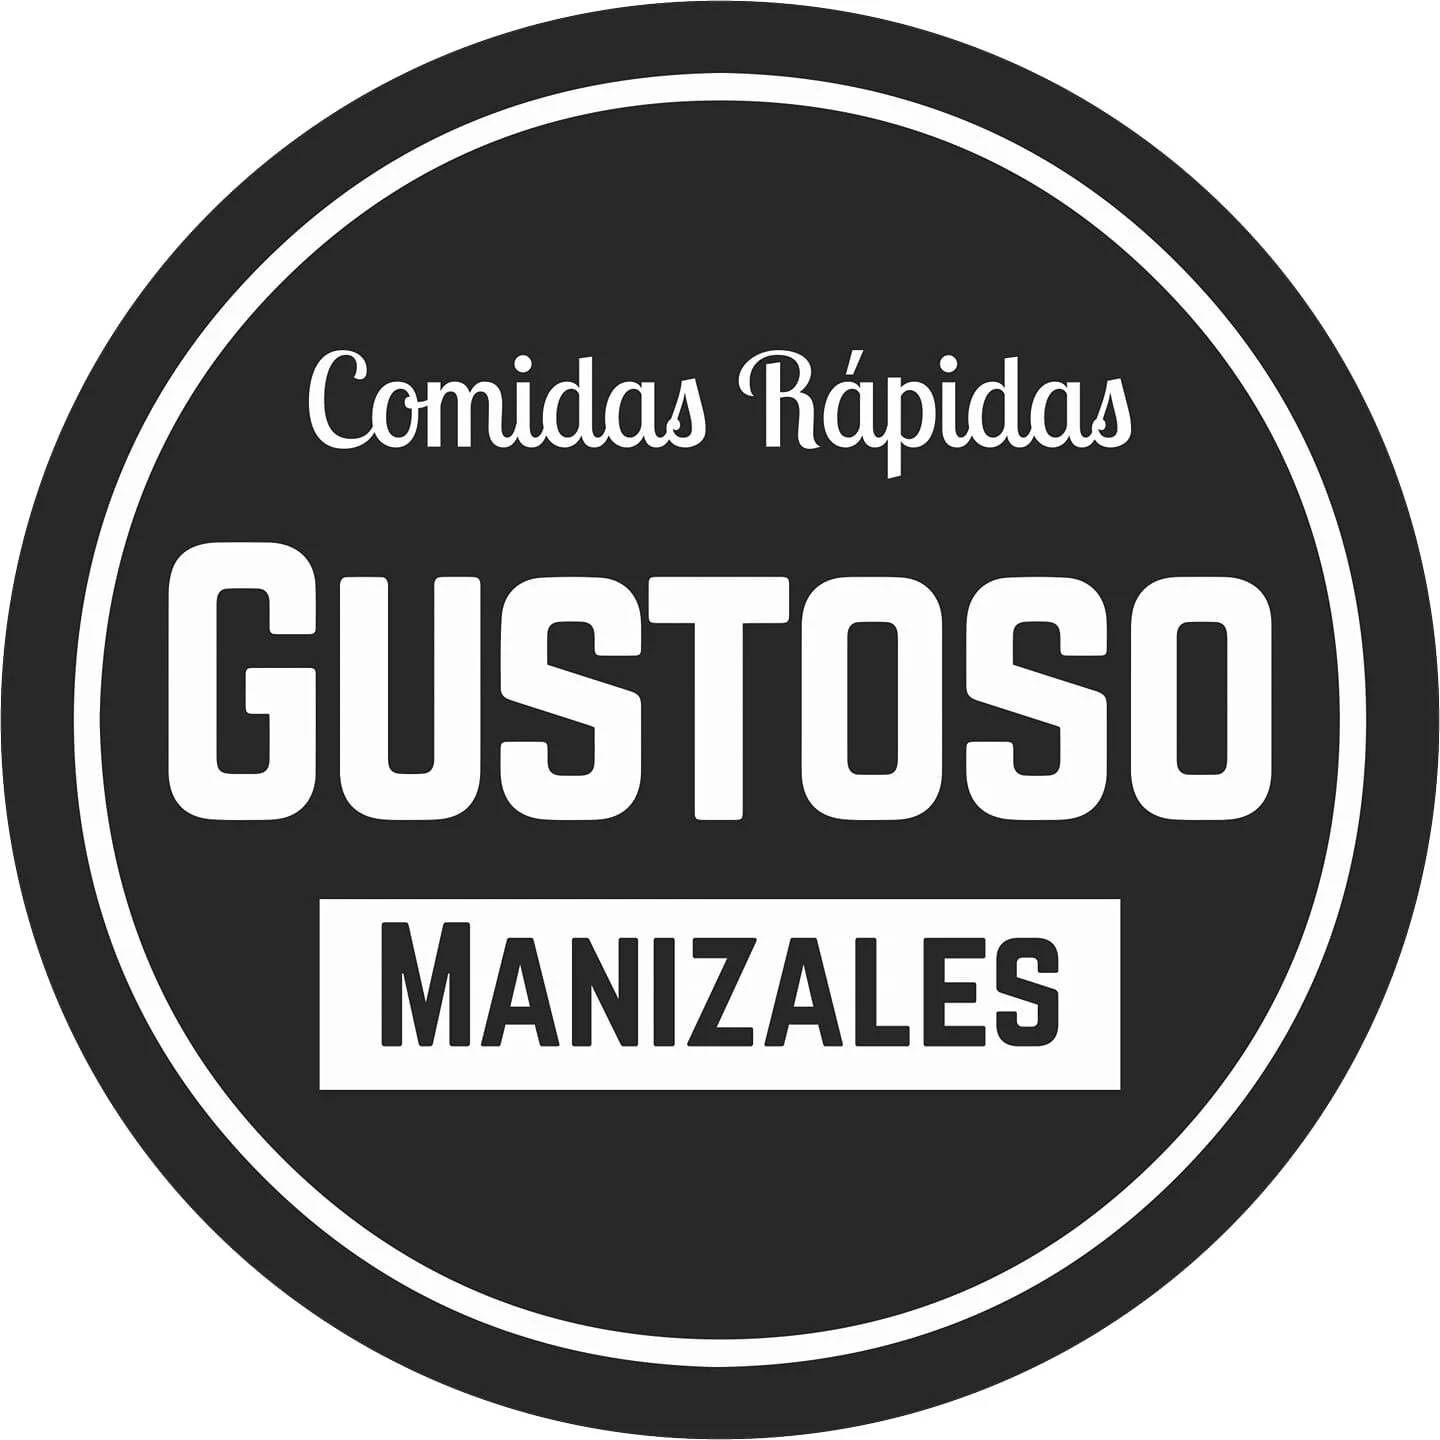 Gustoso Manizales-6431